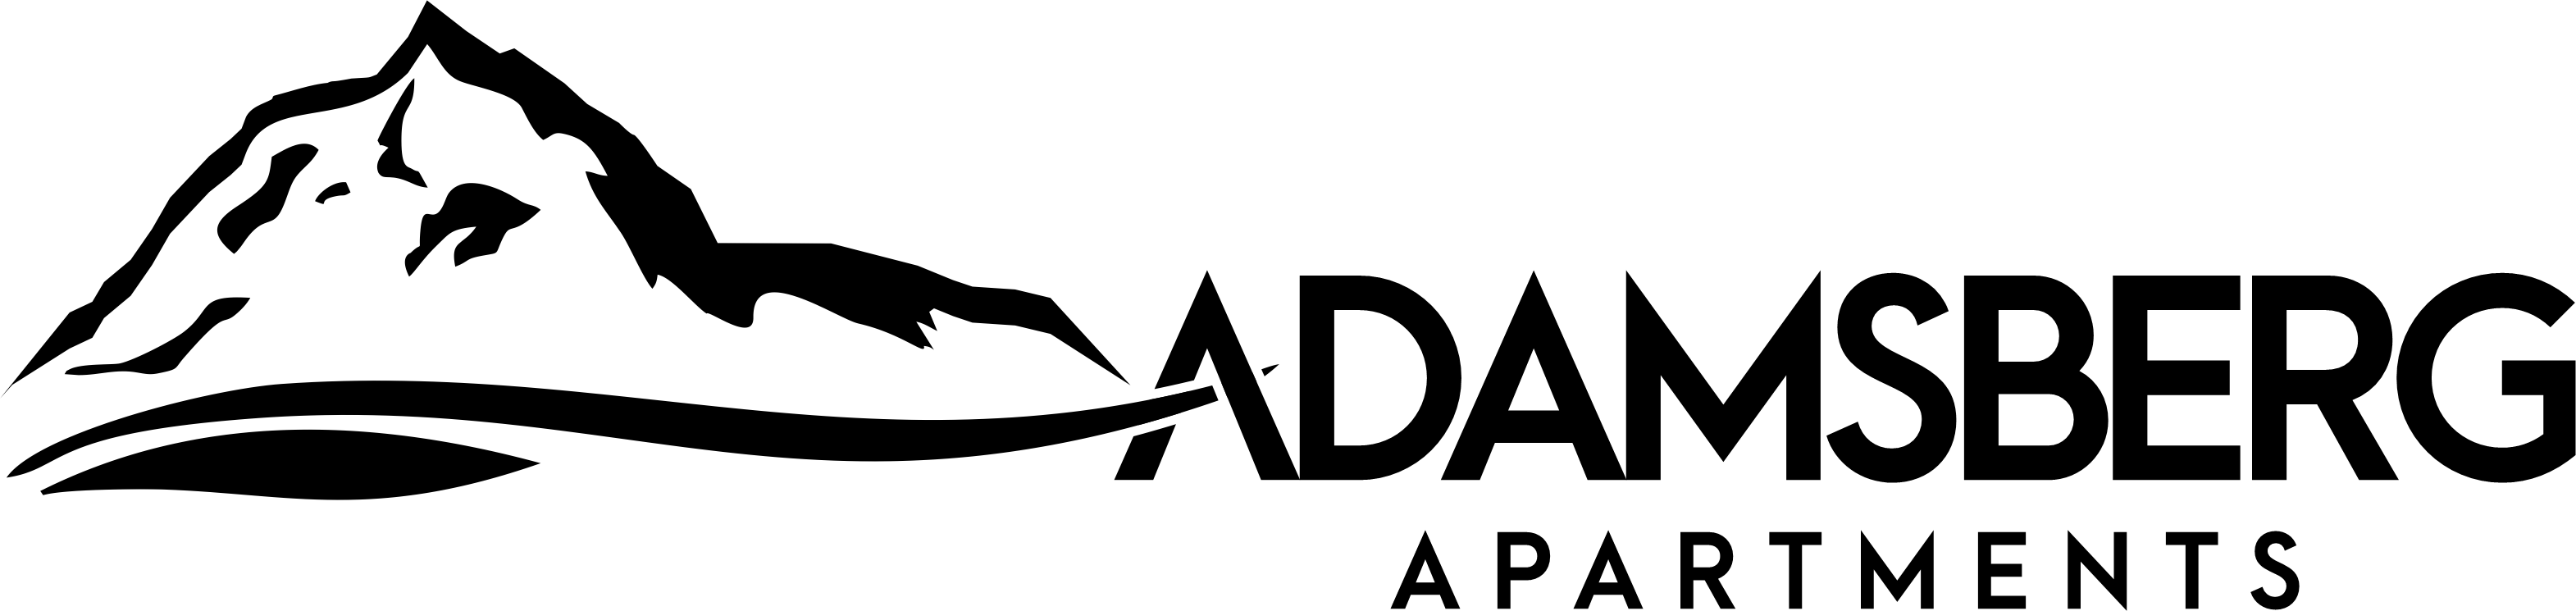 Logo-Transparency-full-black